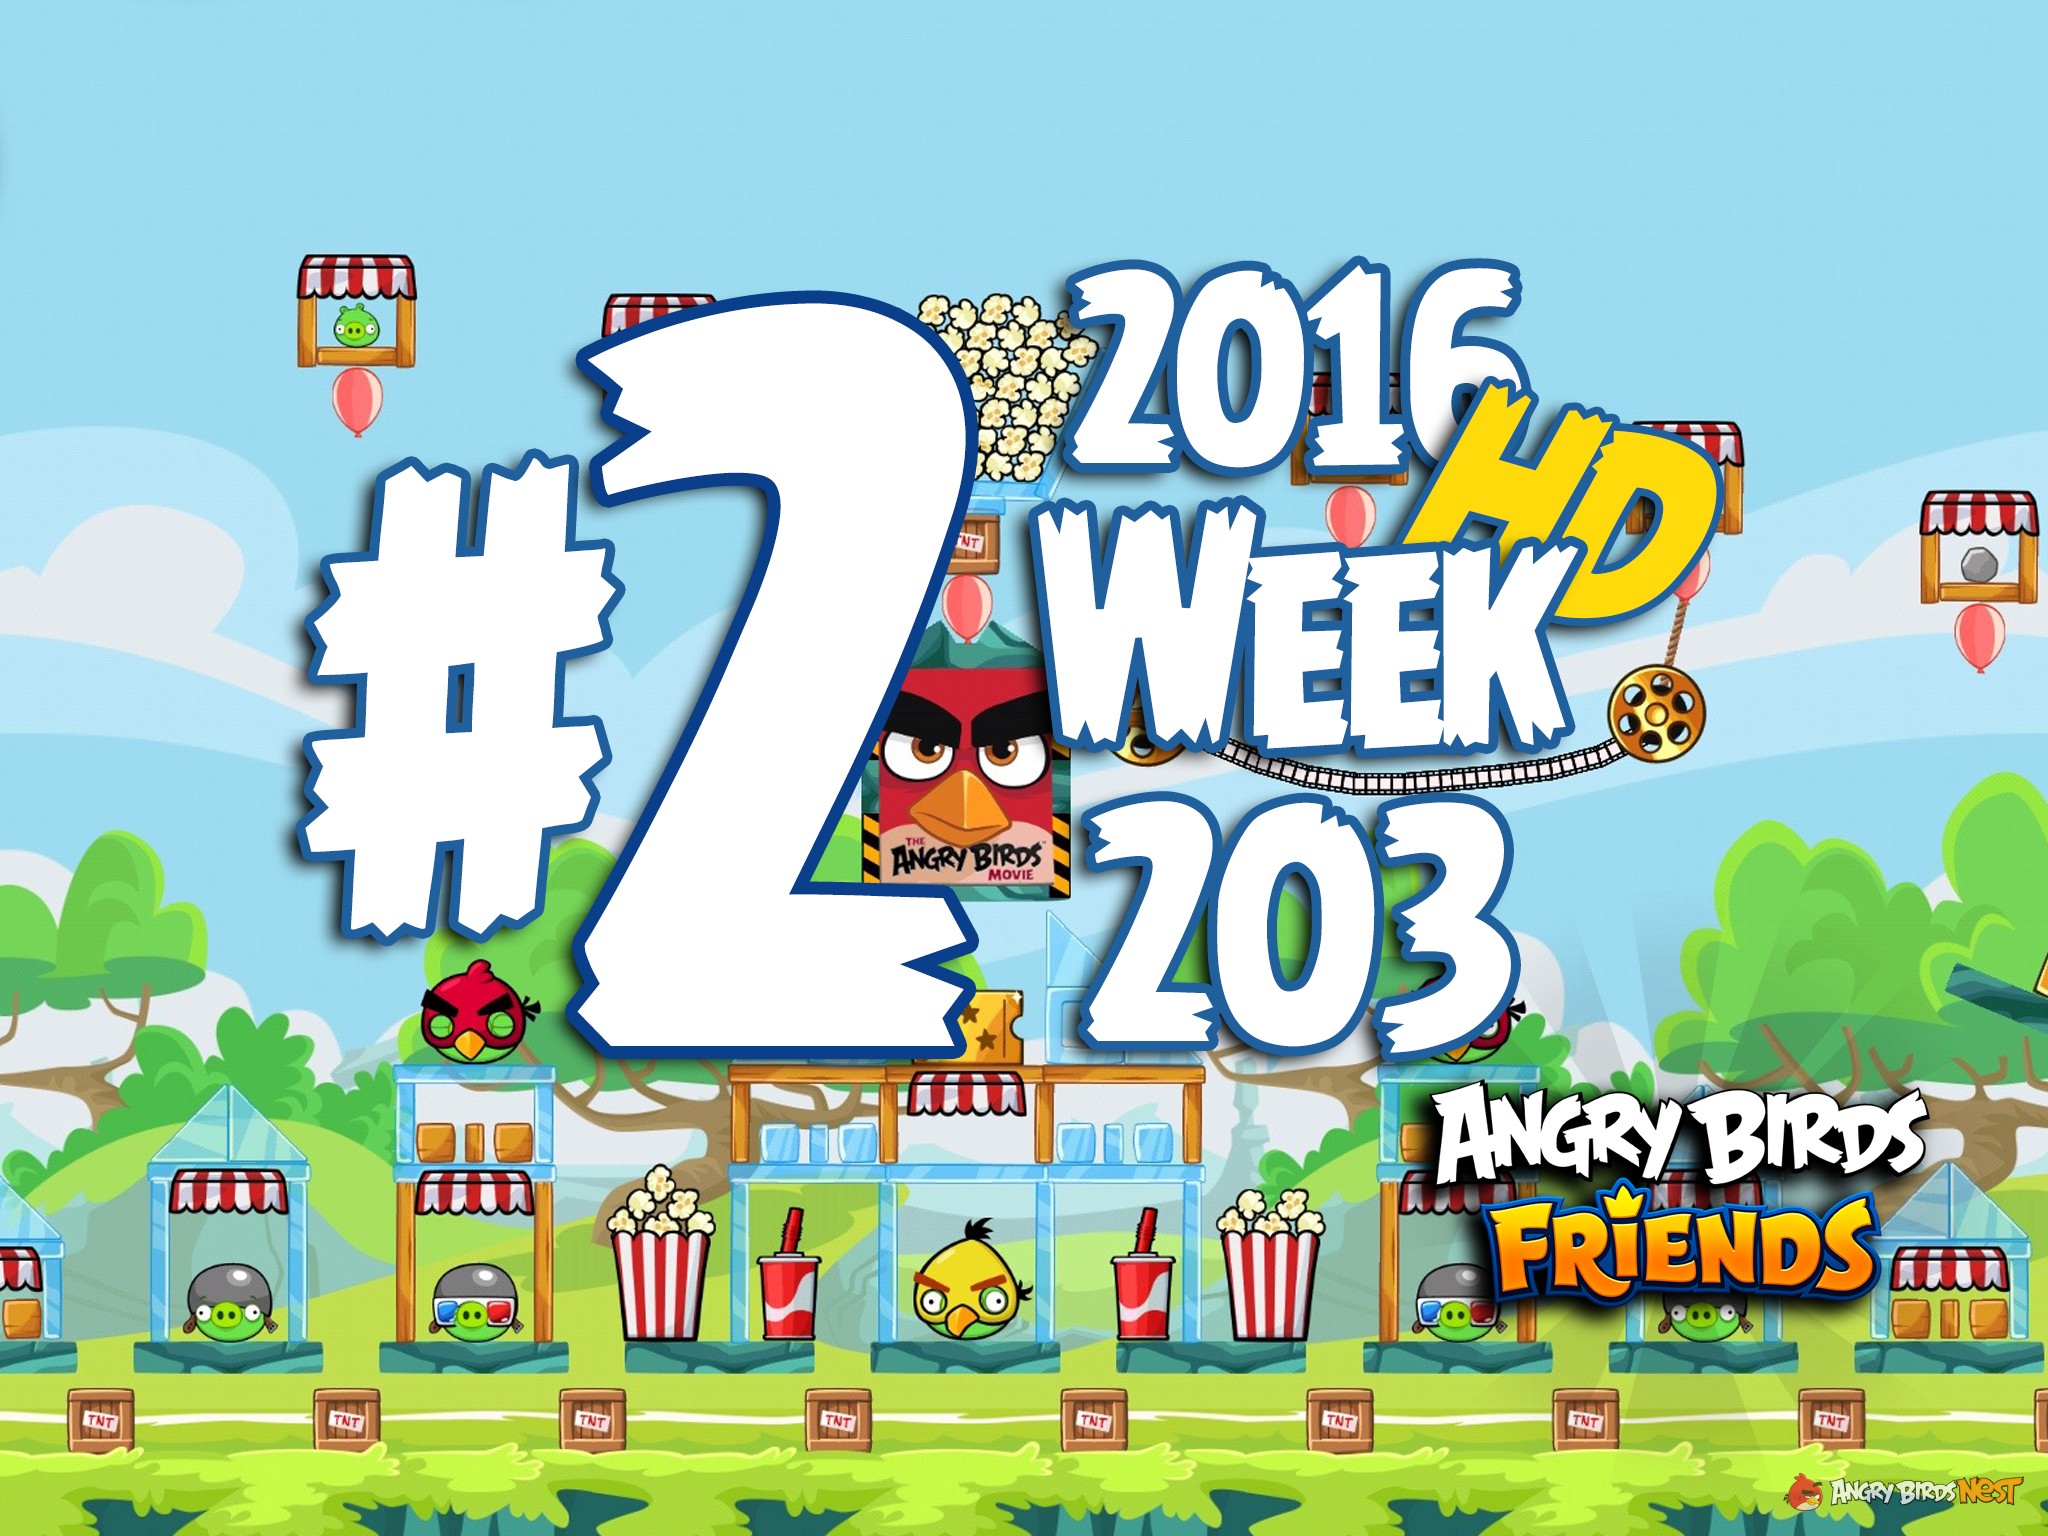 Angry Birds Friends Tournament Level 2 Week 203 Walkthrough | March 31st 2016